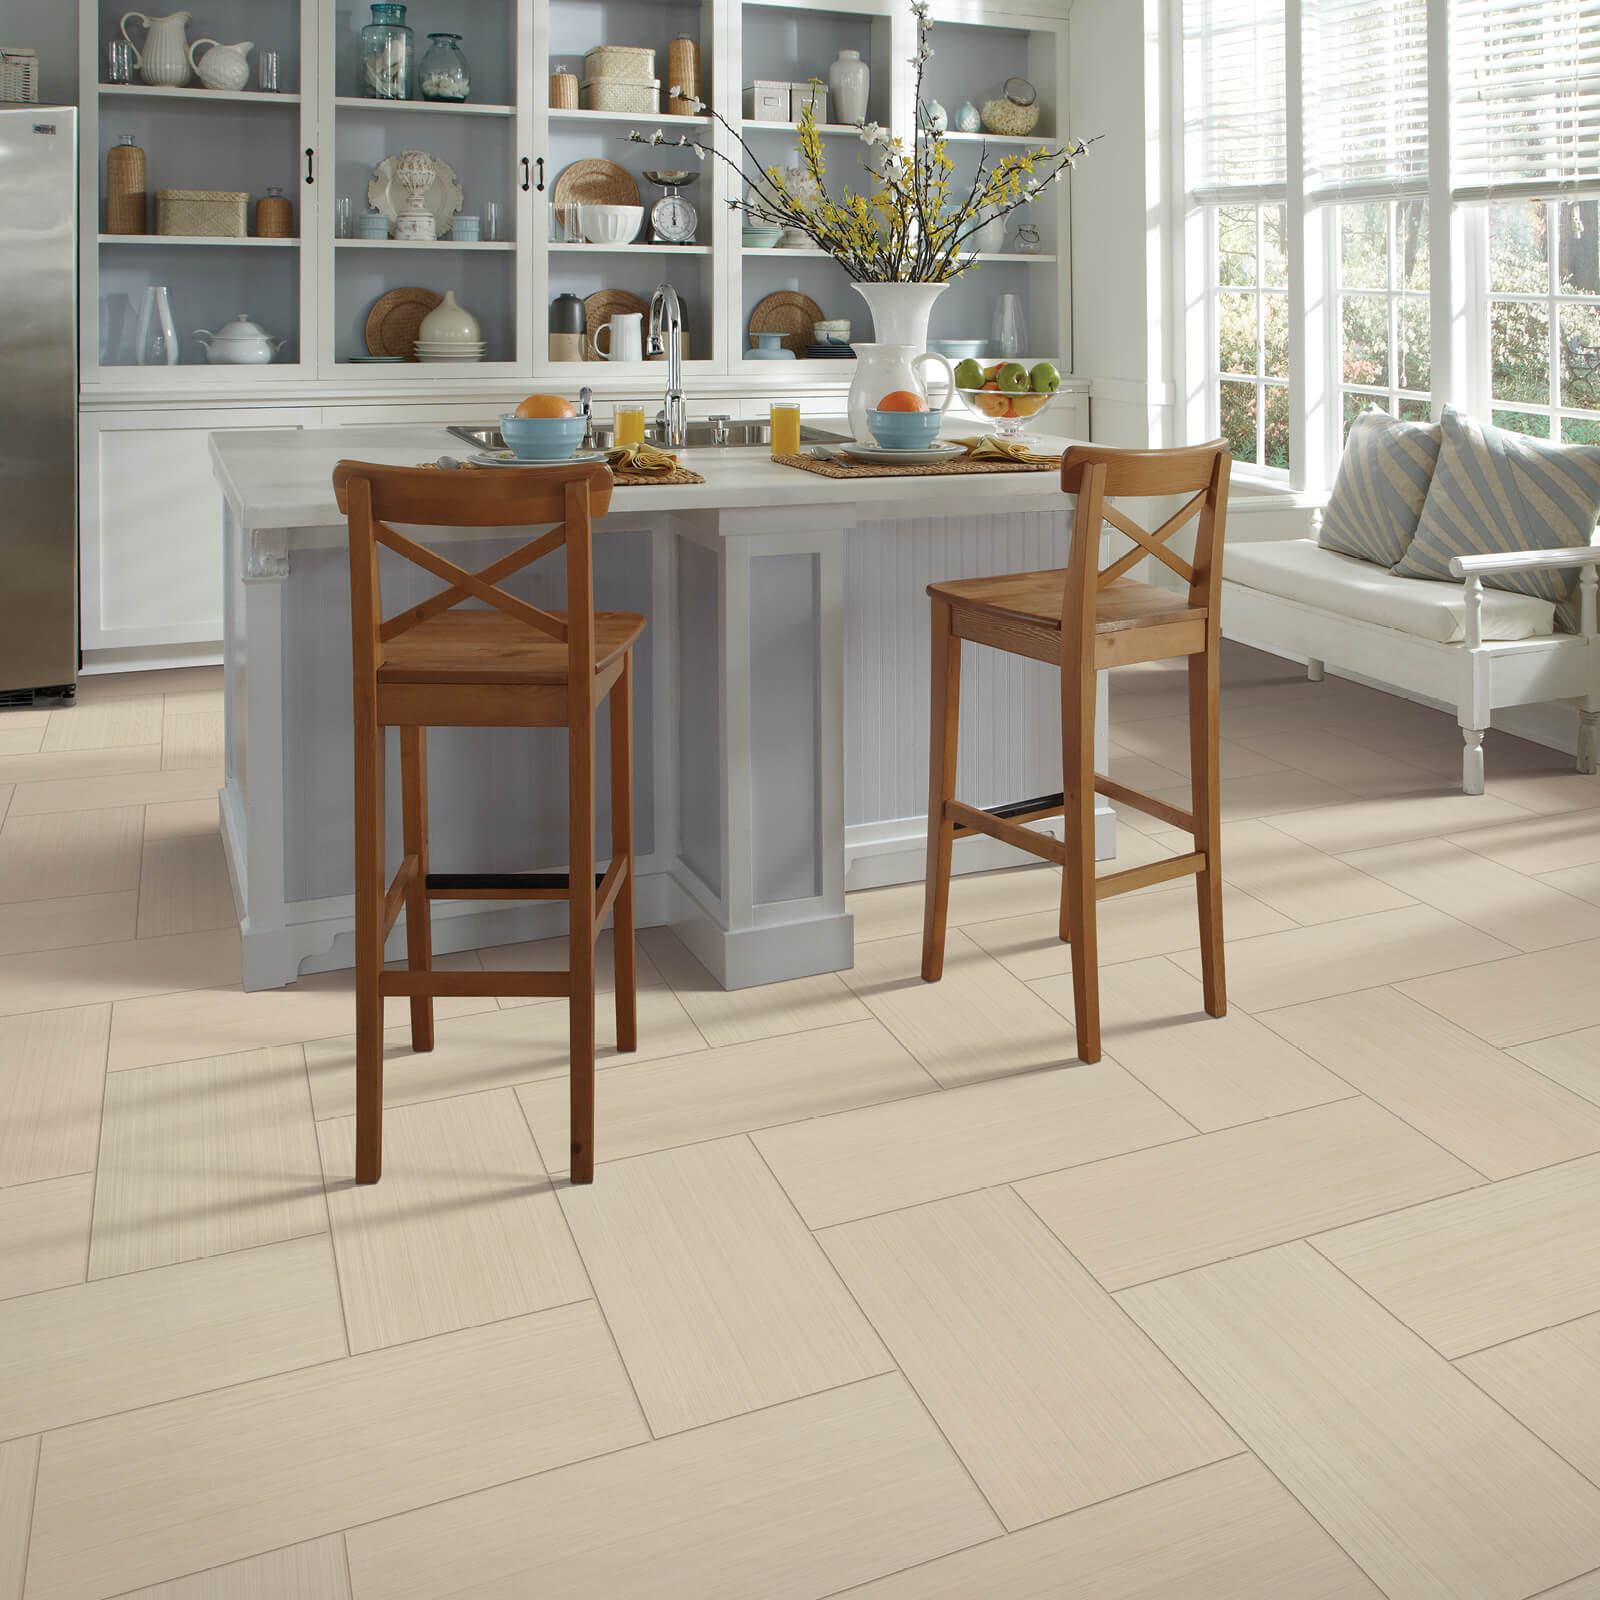 Tile flooring in kitchen | Carpet Gallery